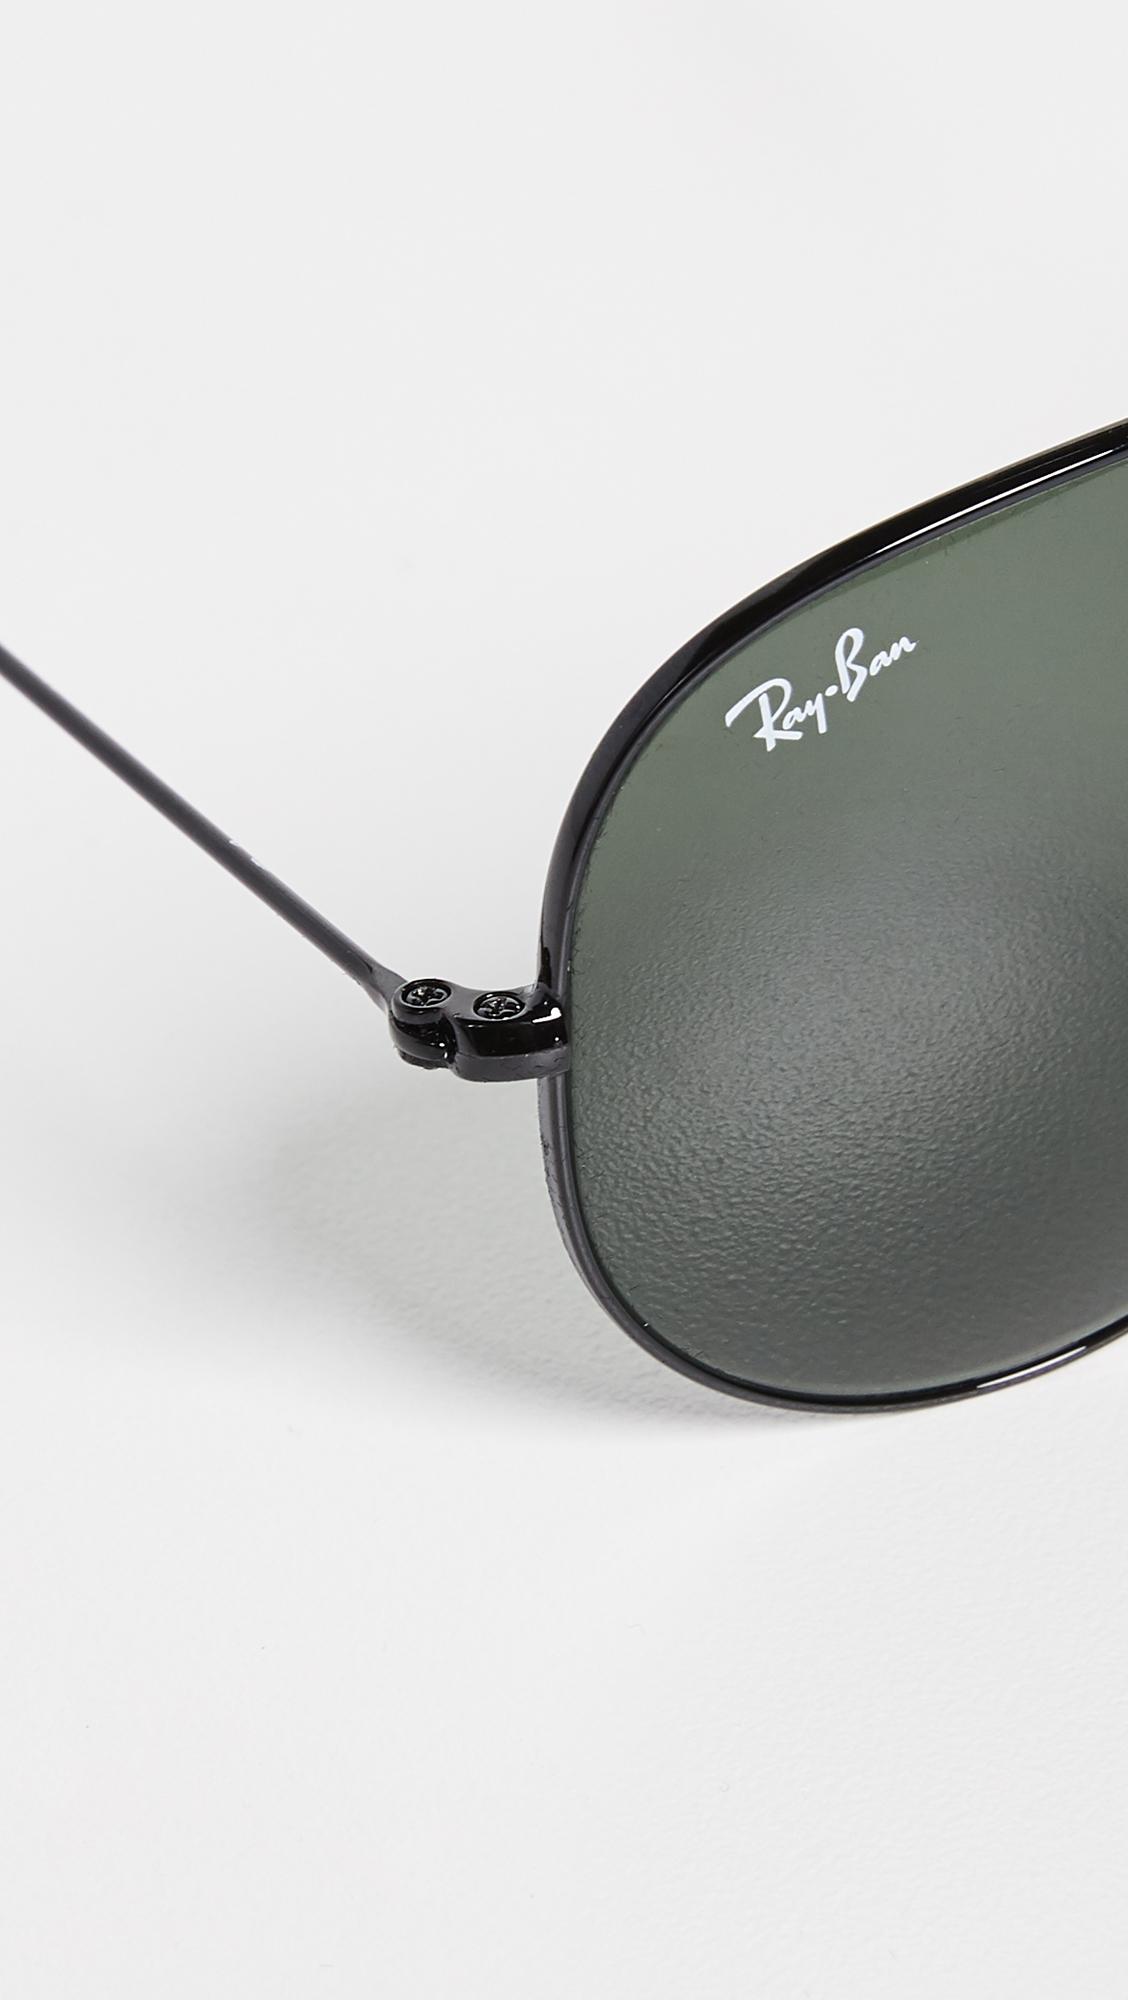 Ray Ban Rb3025 Oversized Classic Aviator Polarized Sunglasses In Black Green Black Lyst